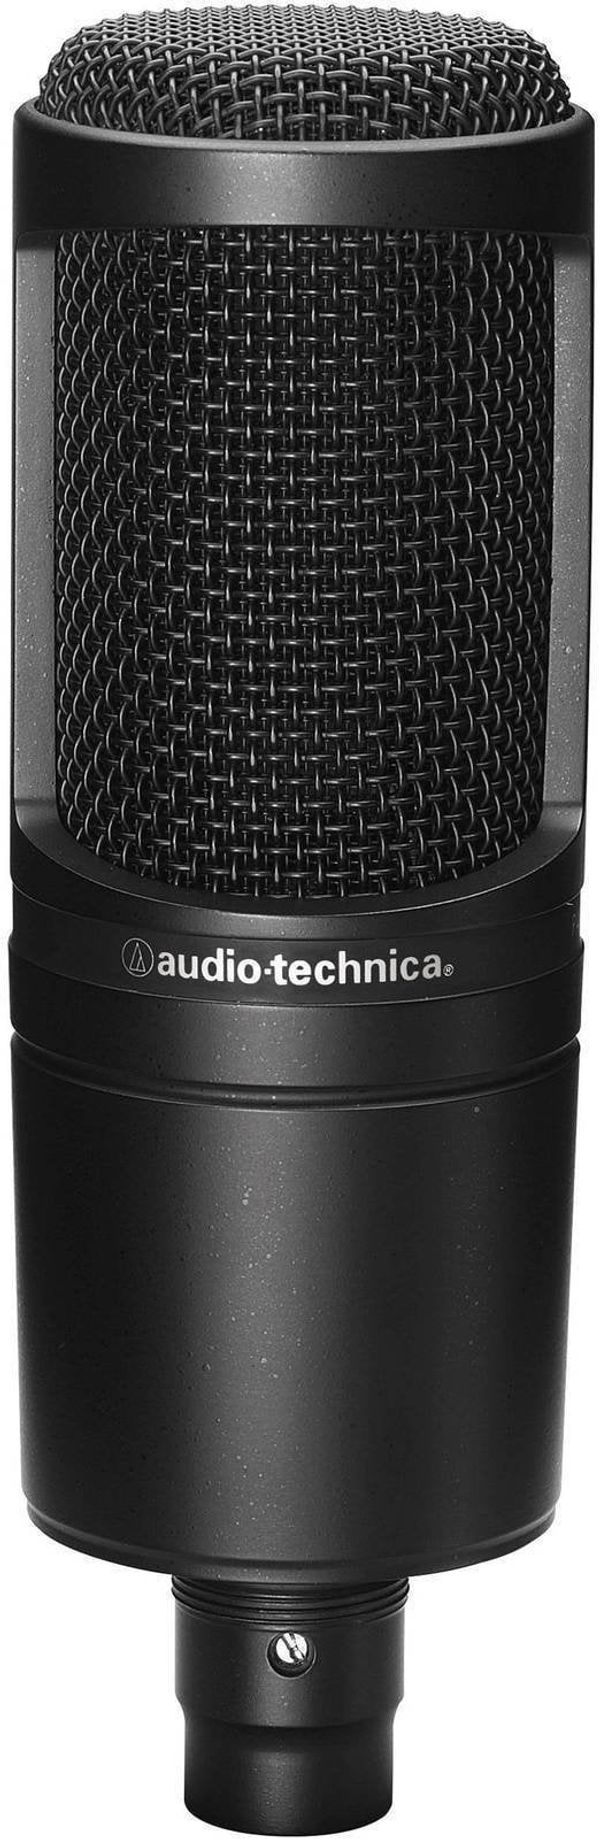 Audio-Technica Audio-Technica AT2020